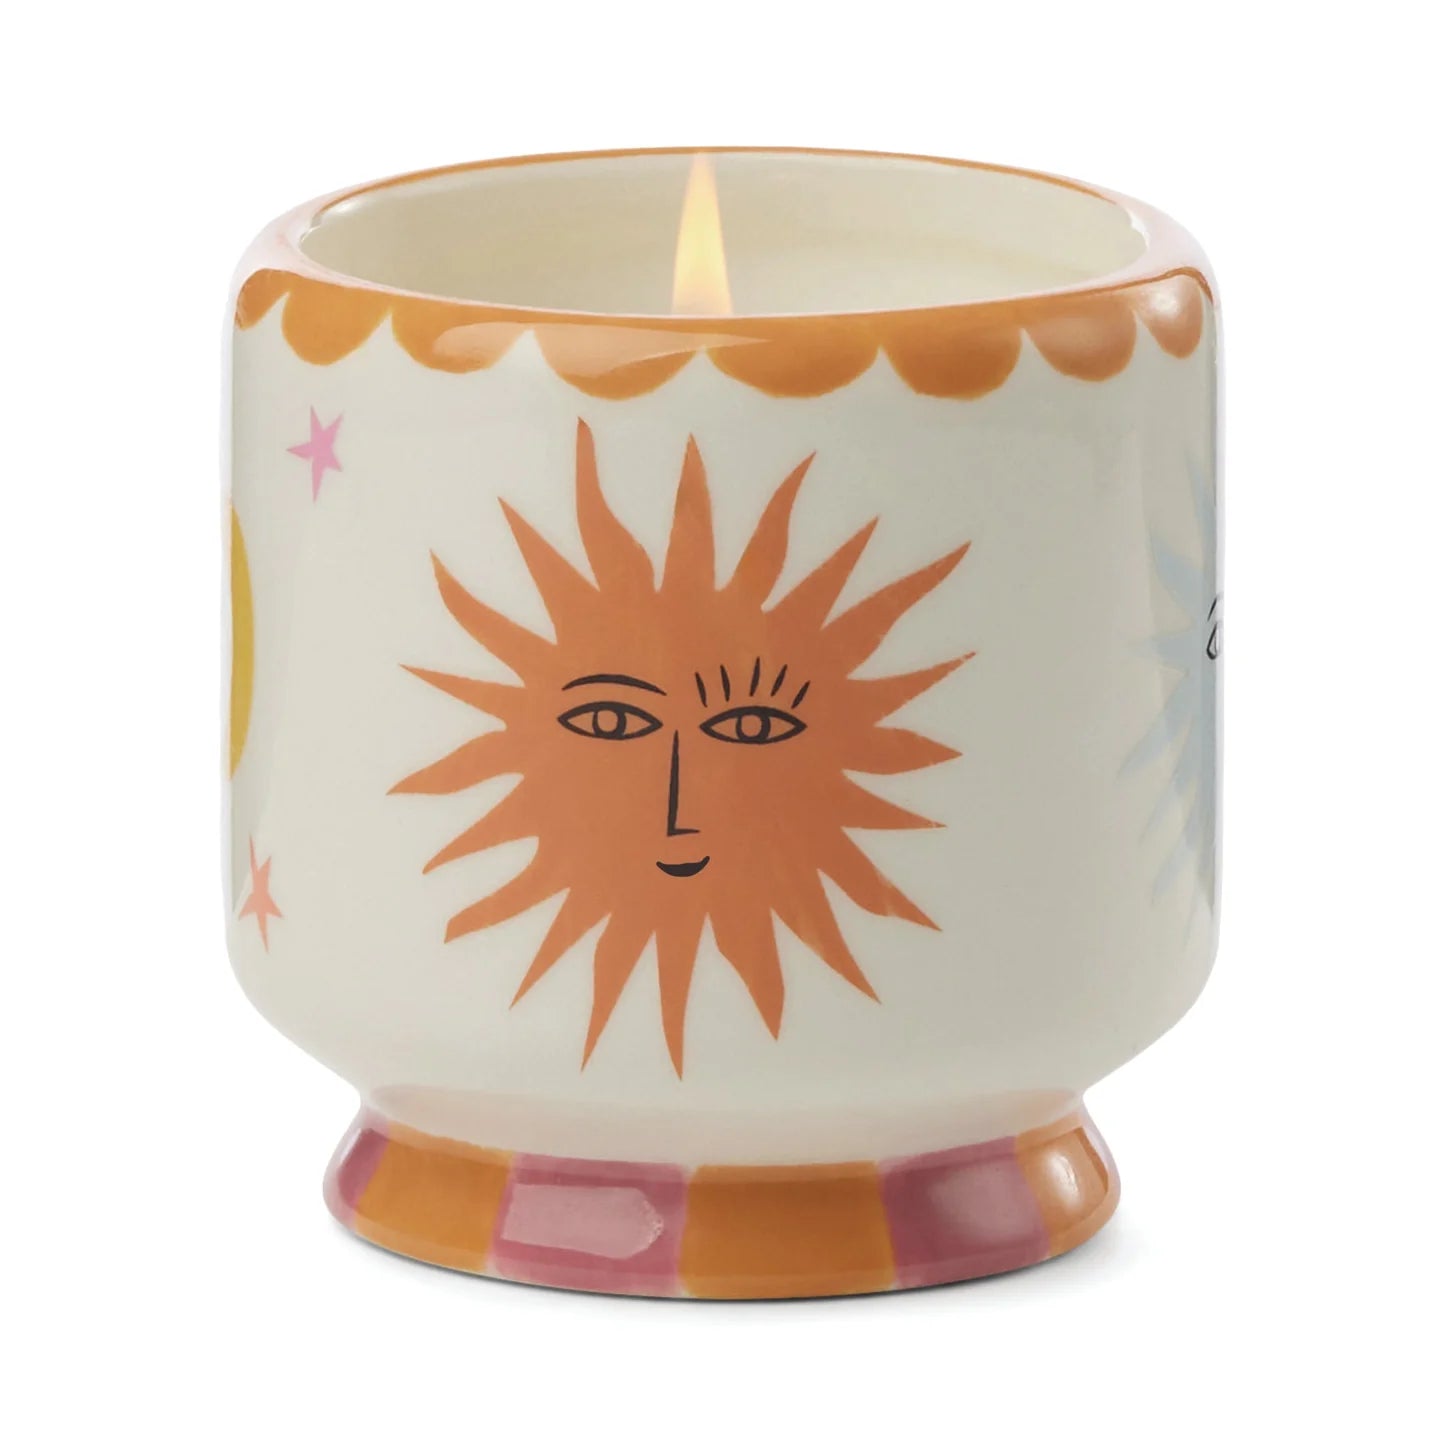 A Dopo Hand Painted Sun Ceramic Candle - Orange Blossom